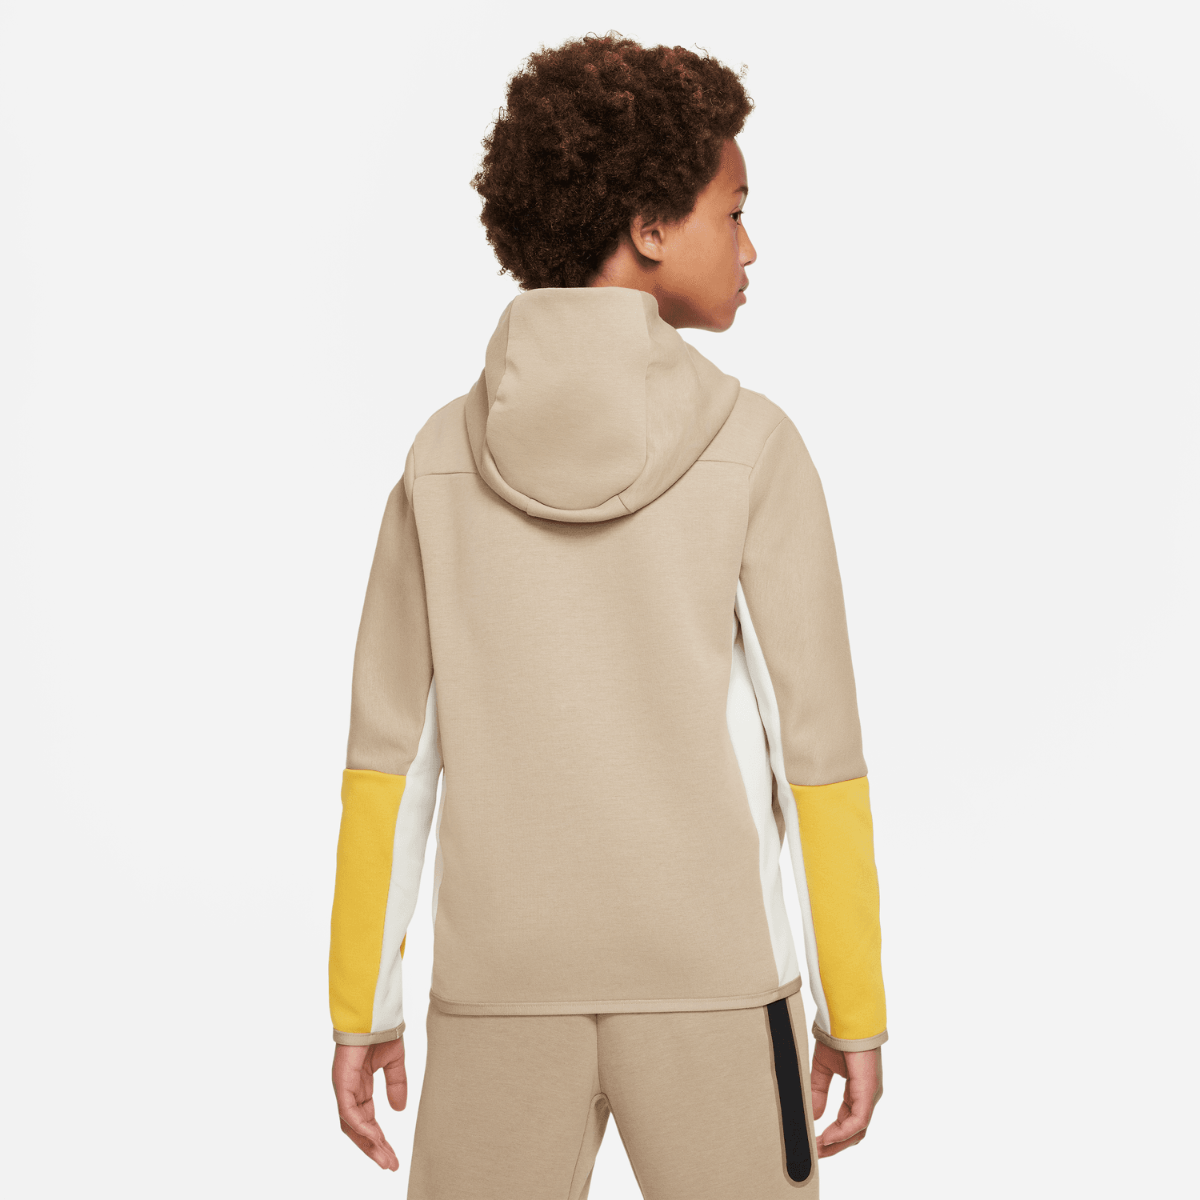 Veste Nike Tech Fleece Junior - Beige/Blanc/Jaune